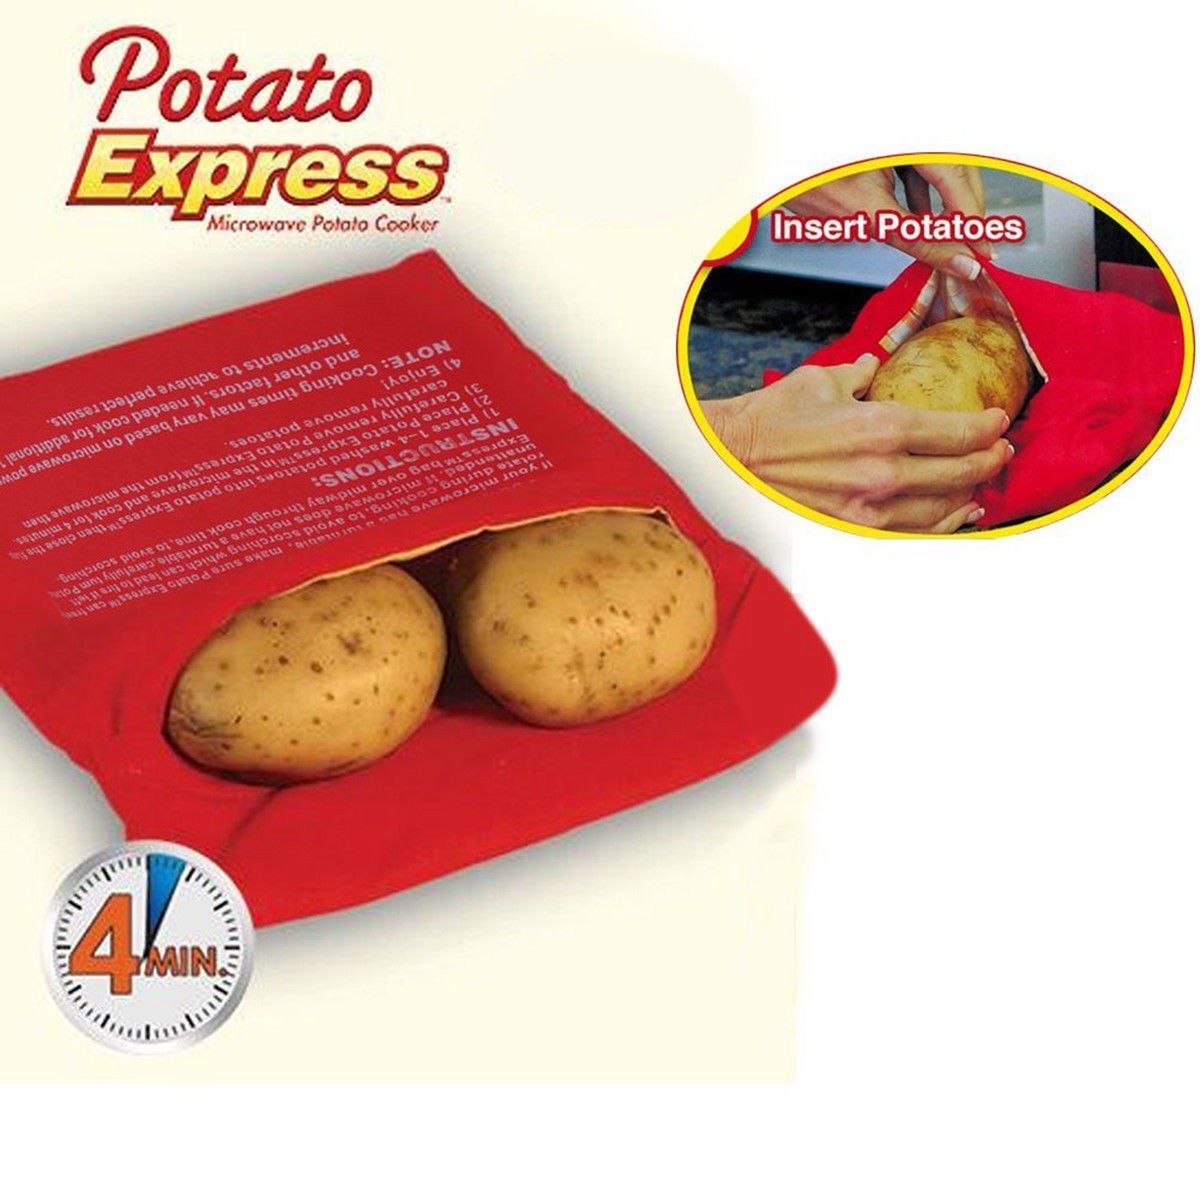 1Pcs Rood Wasbare Cooker Bag Magnetron Bakken Aardappelen Zak Rijst Pocket Koken Gereedschap Om Te Koken Keuken Gadgets Bakken tool